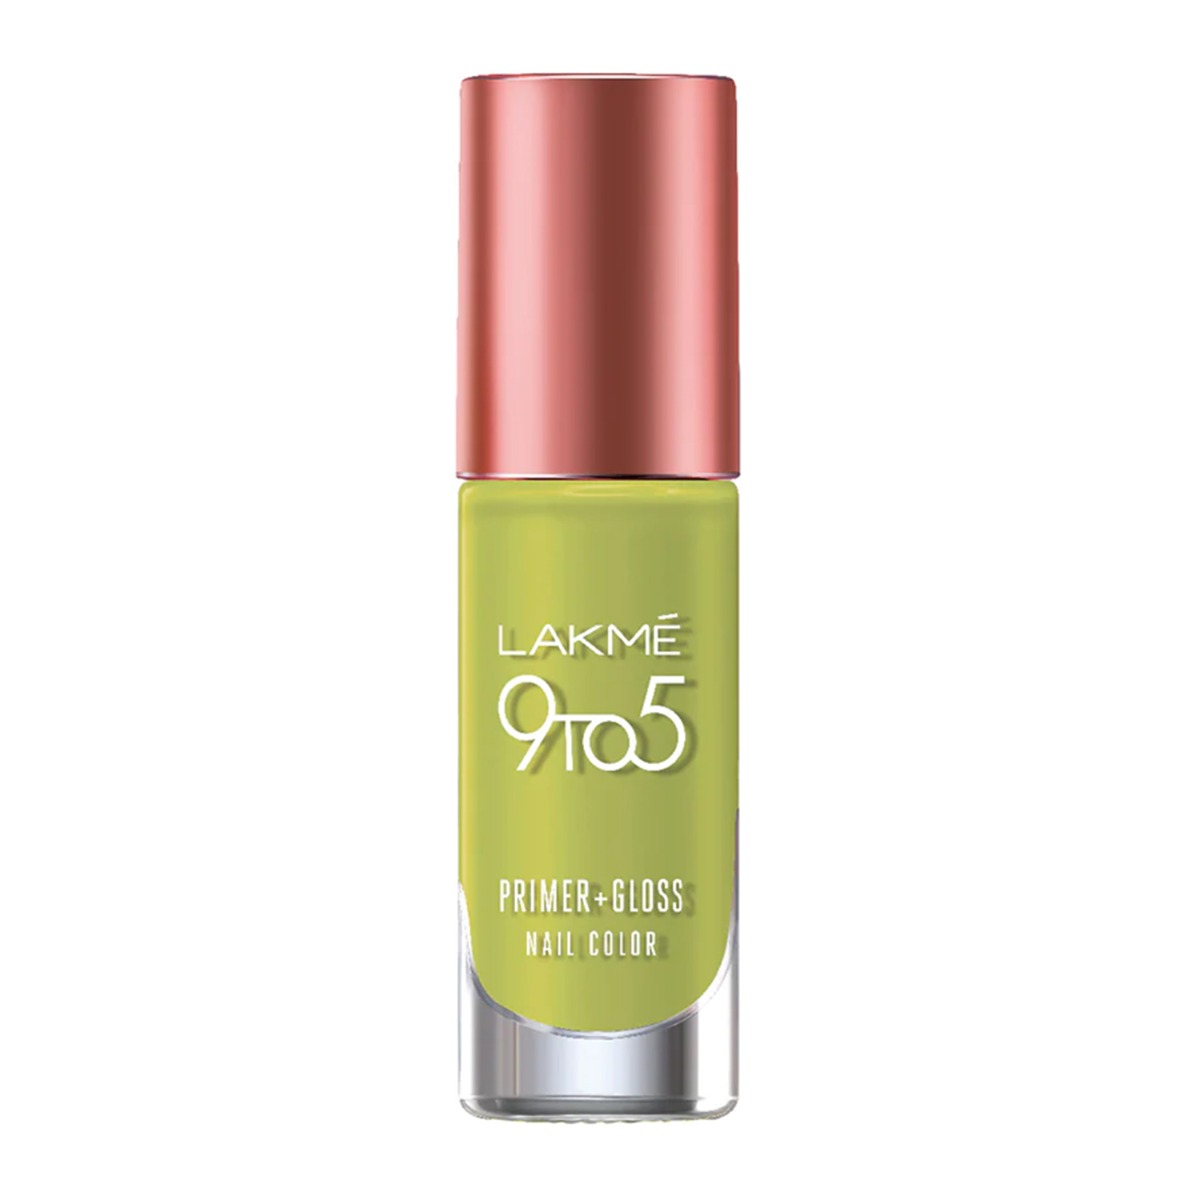 LAKME 9 To 5 Primer + Gloss Nail Color, 6ml